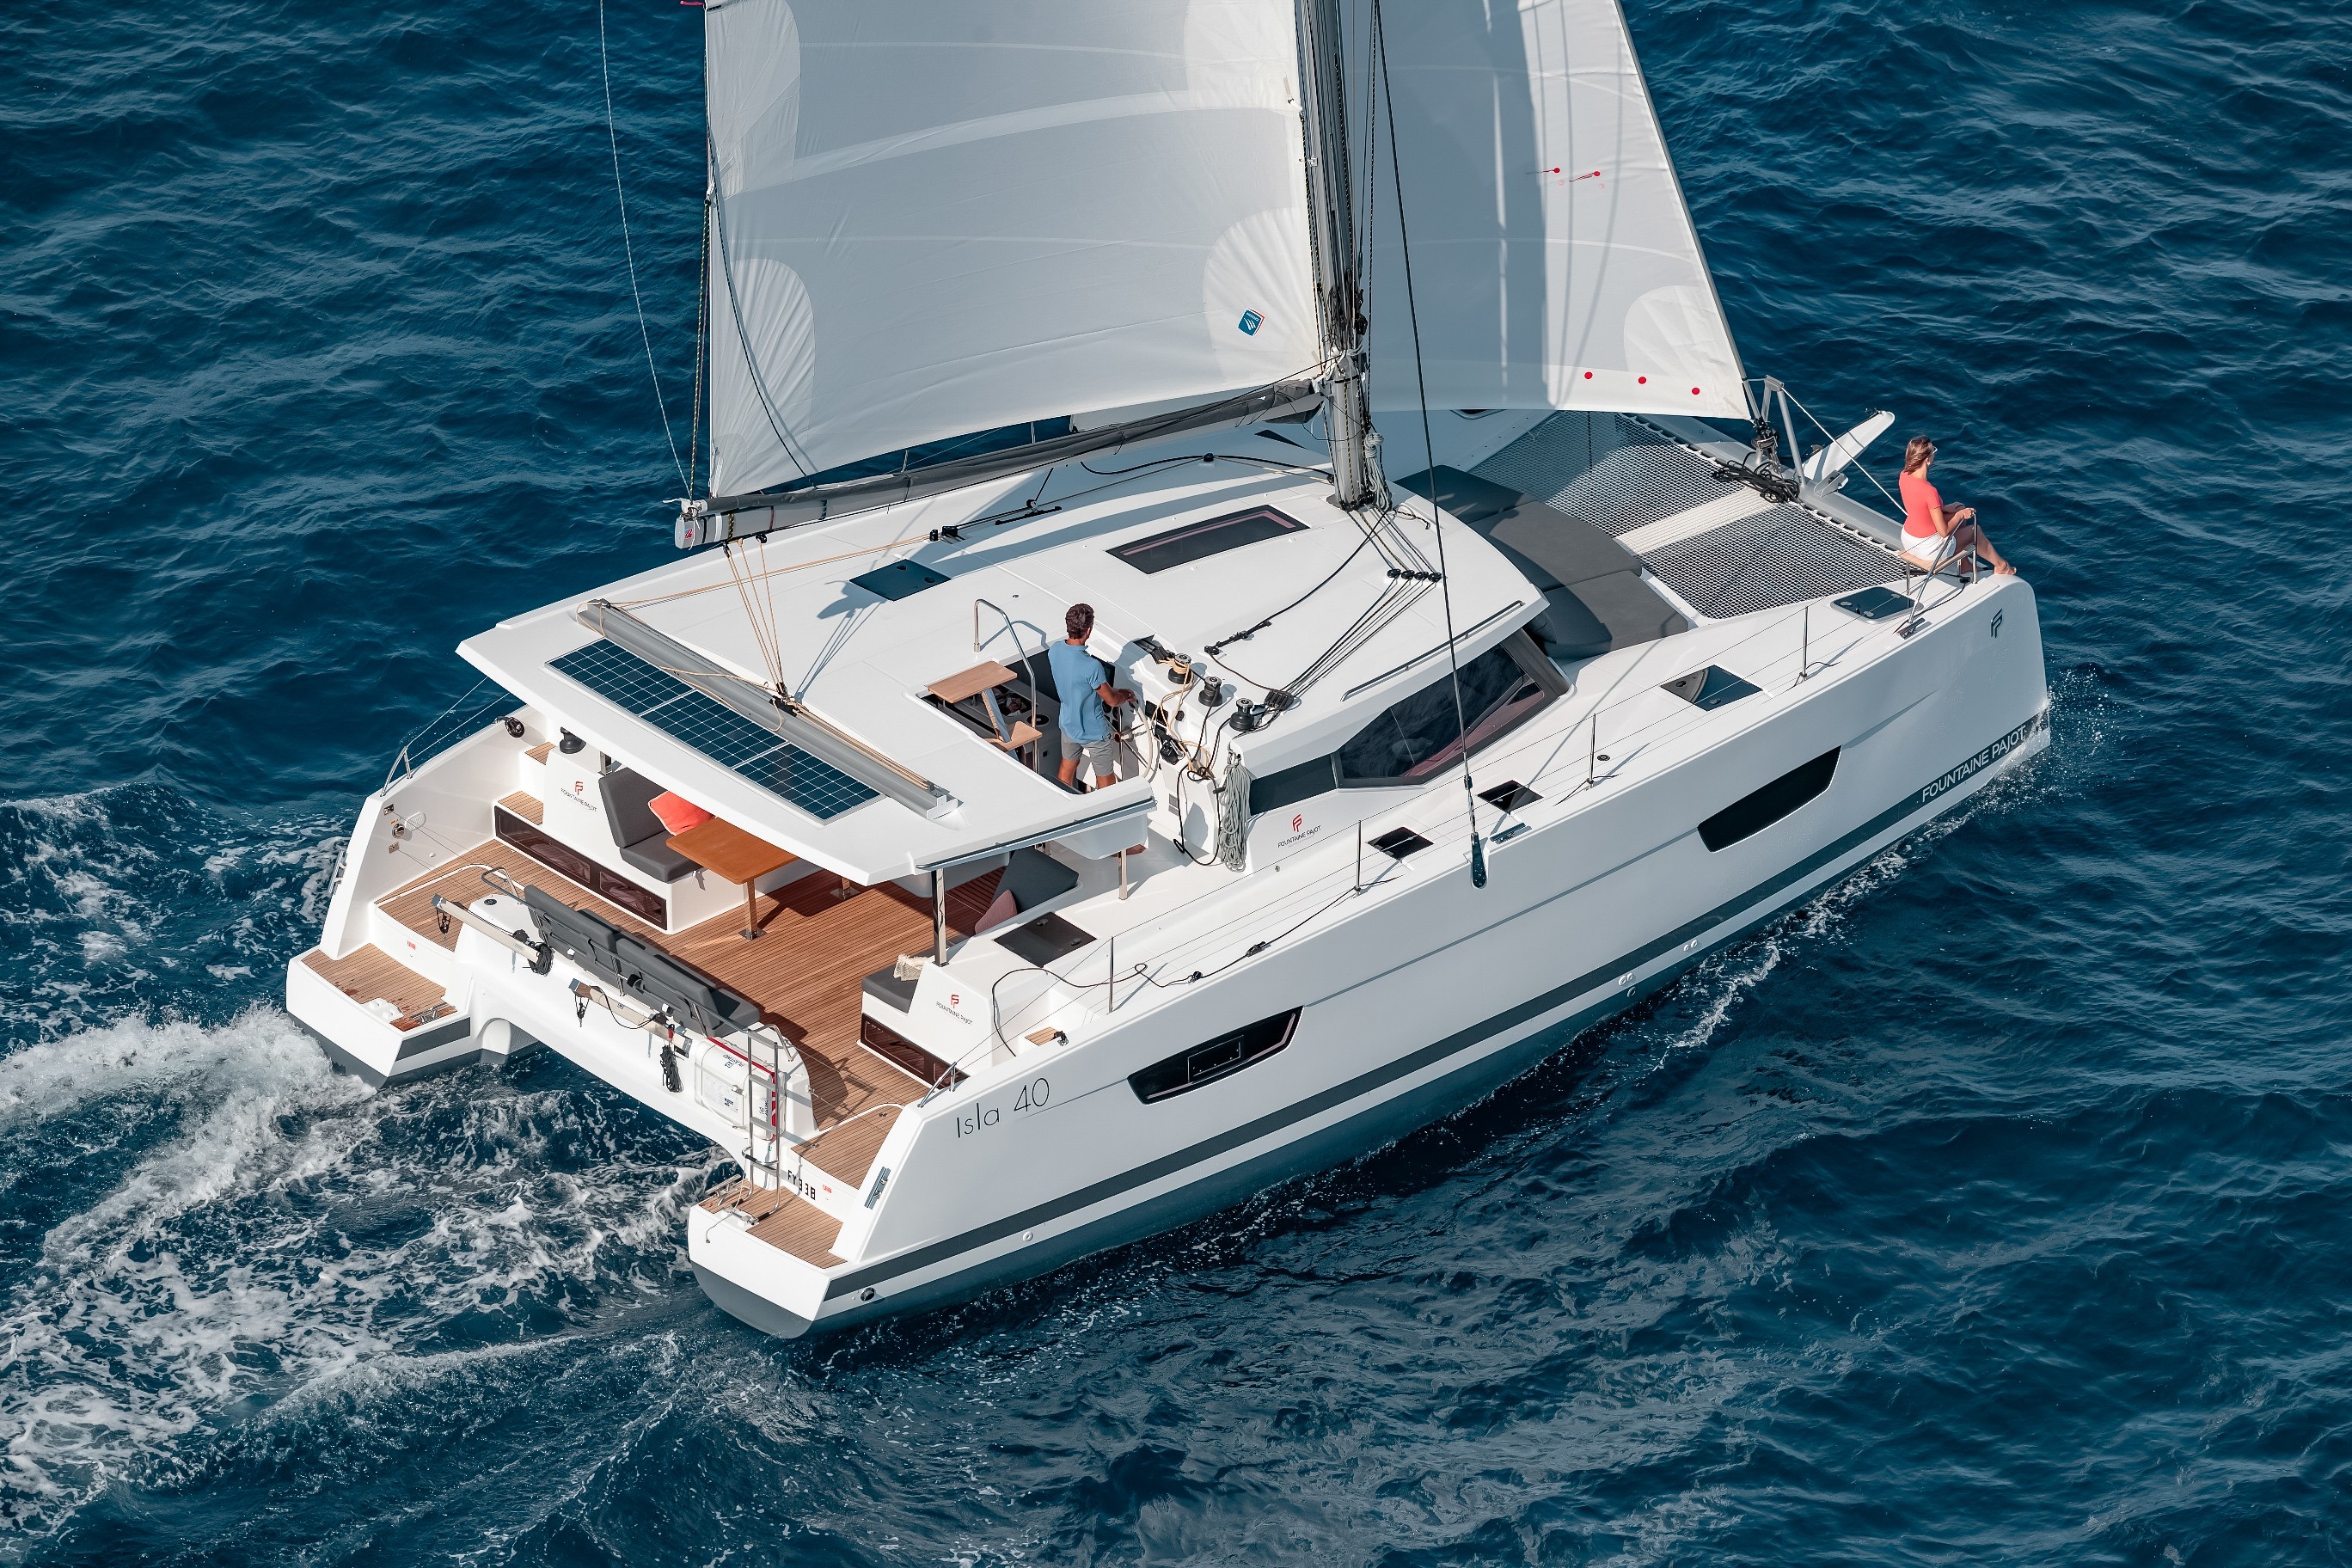 New Sail Catamaran for Sale 2021 ISLA 40 Boat Highlights